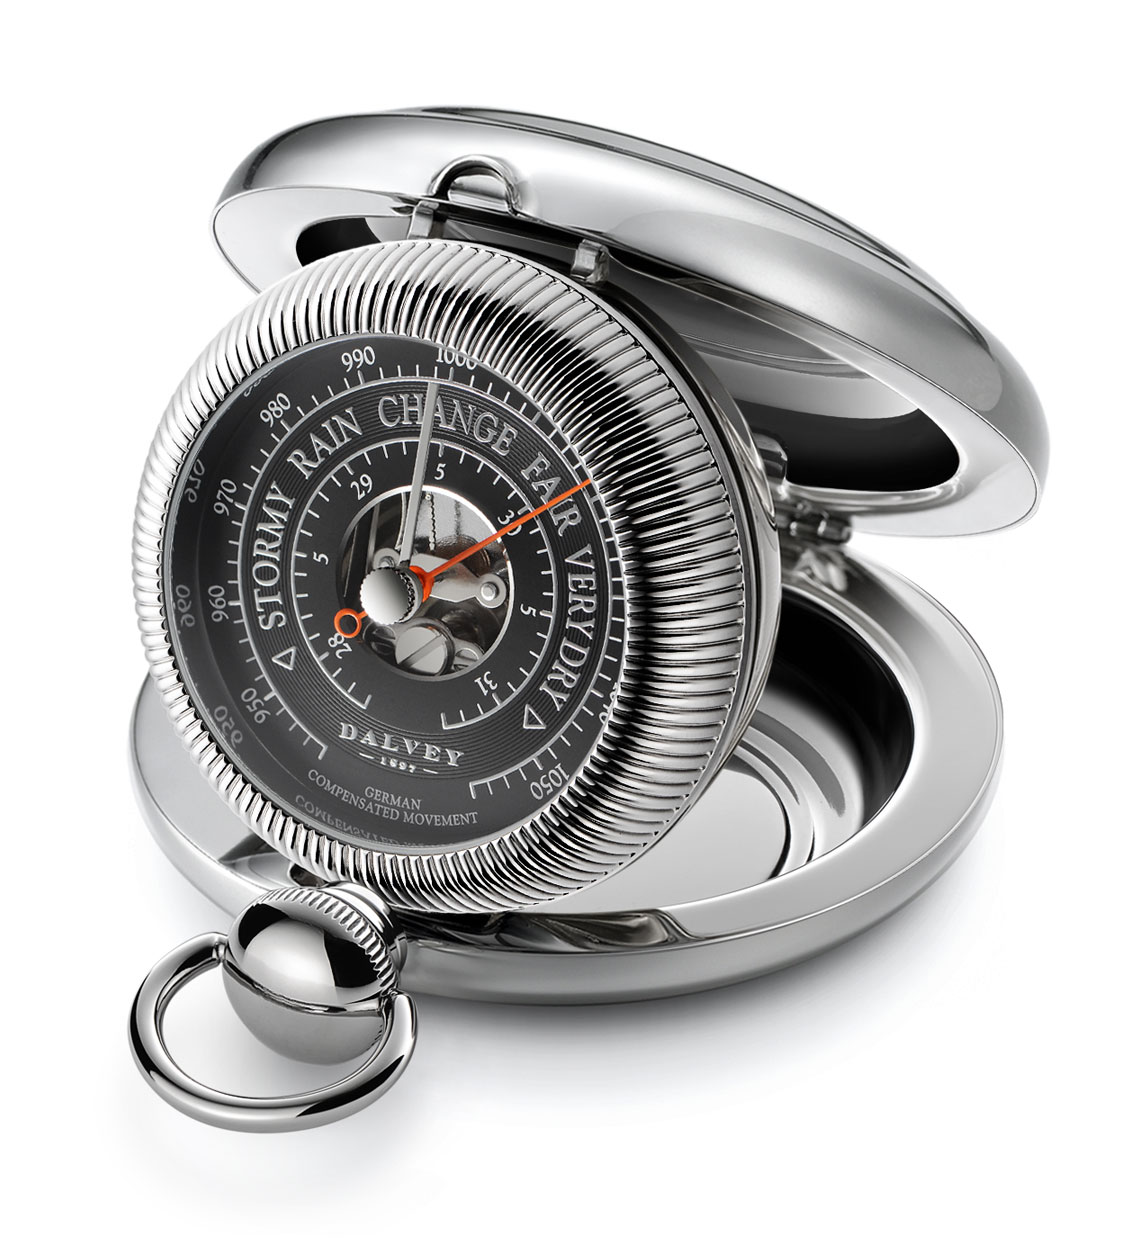 Digital Altimeter Barometer Watches | Sunroad Digital Watch | Sport Watches  Fishing - Digital Wristwatches - Aliexpress